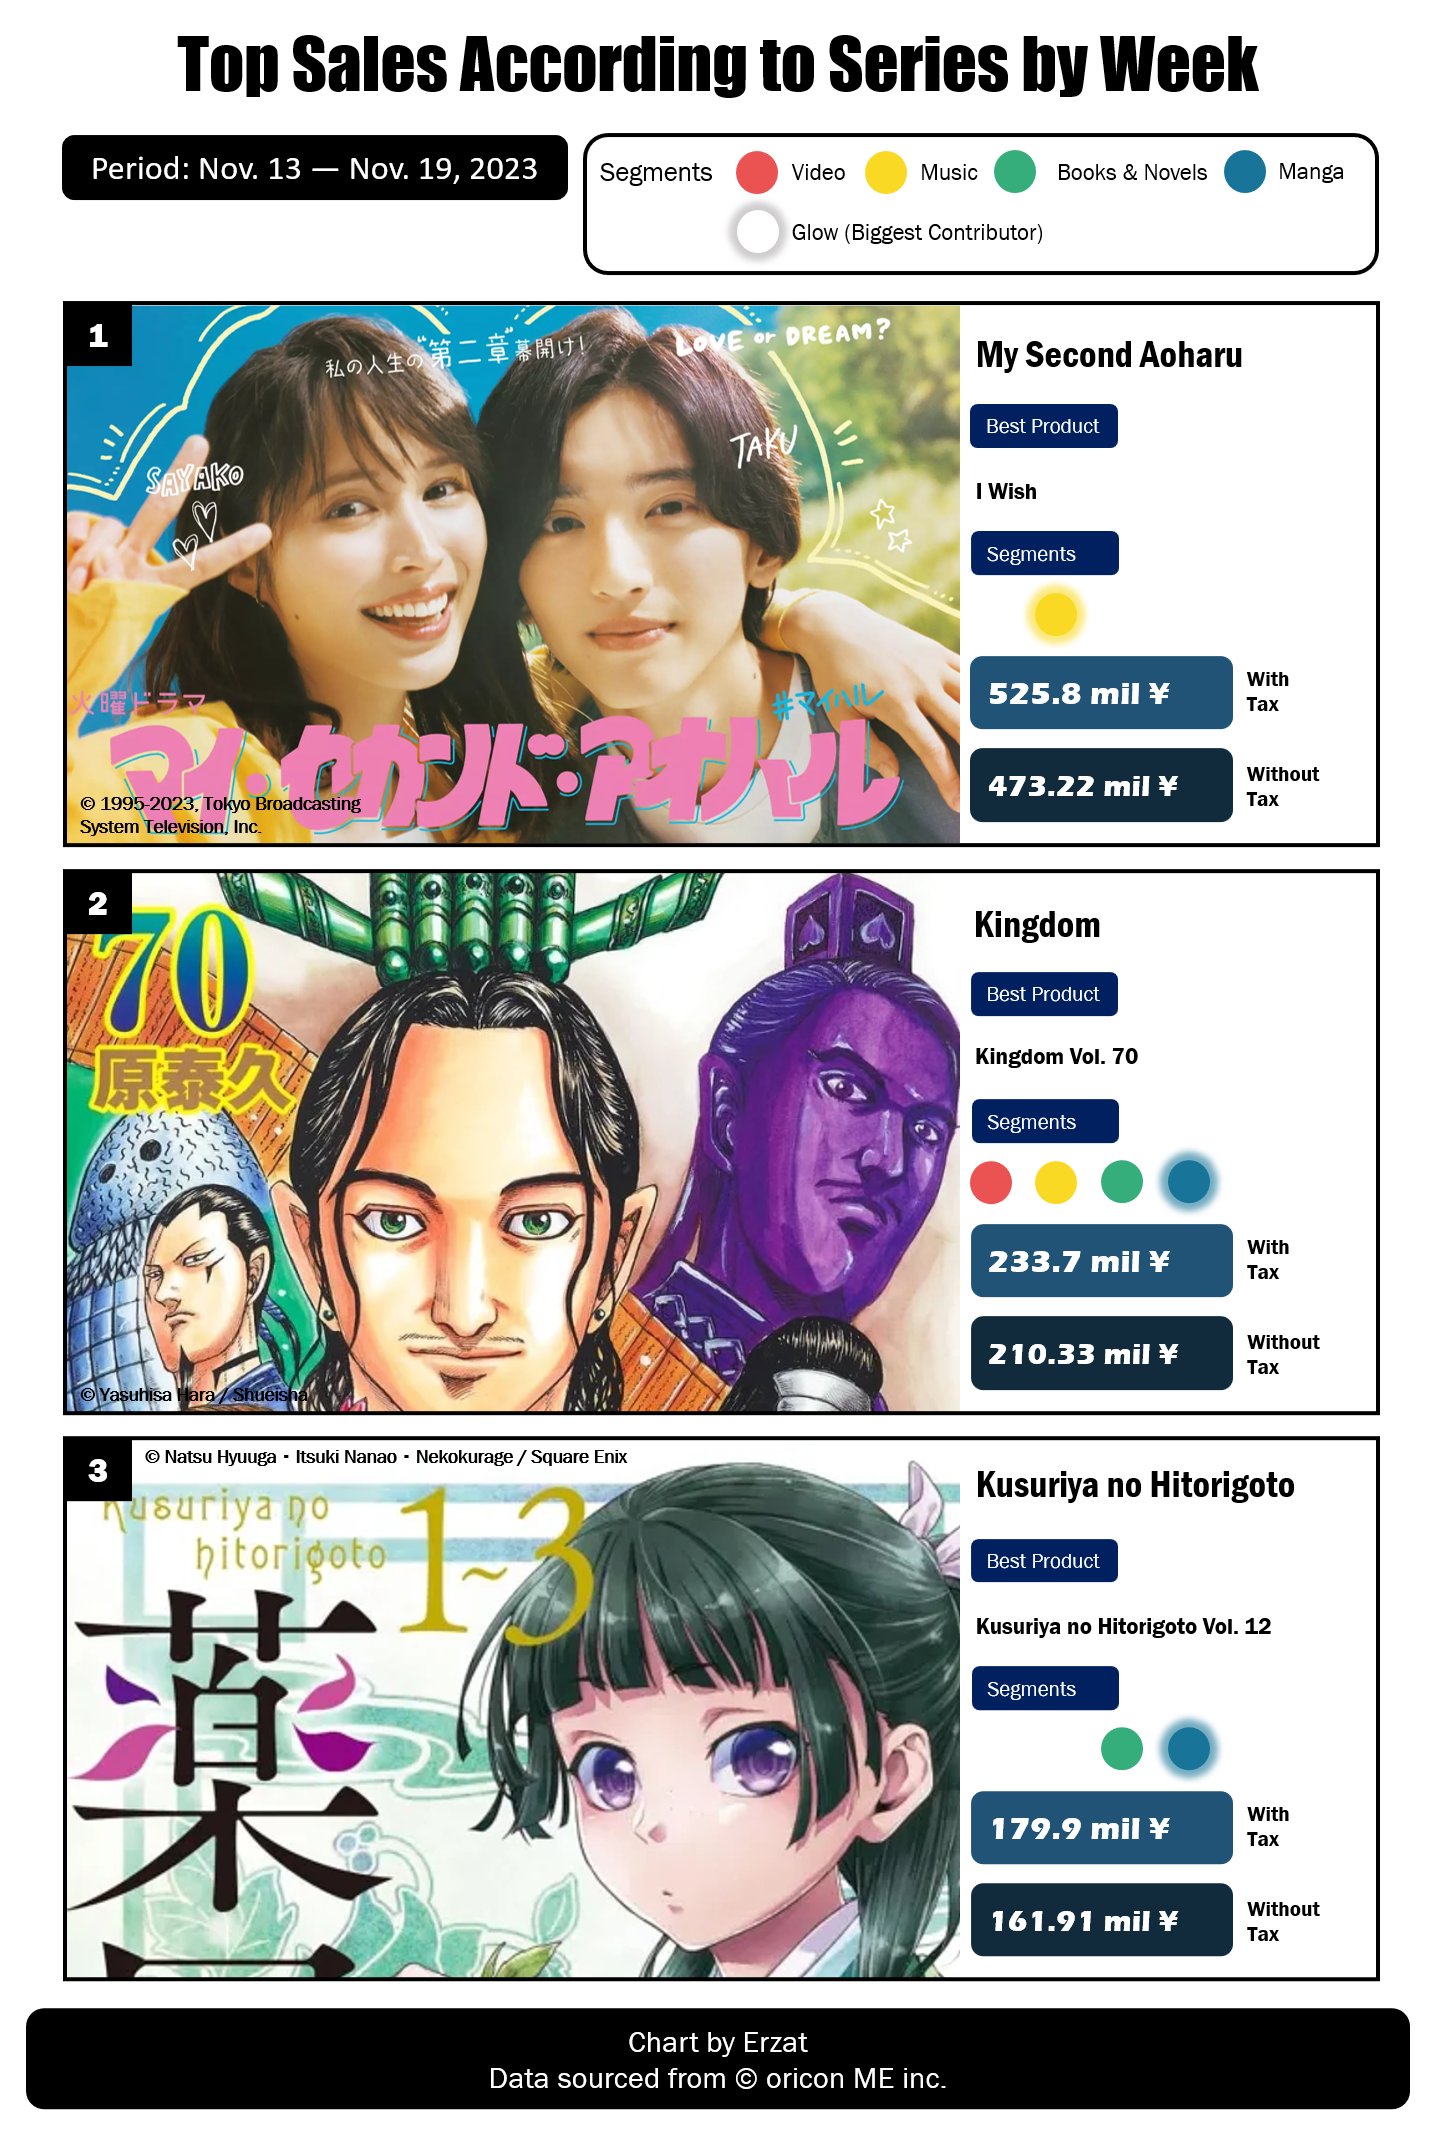 TSUTAYA Weekly Manga Sales Ranking: August 22 - August 28, 2022 - Erzat